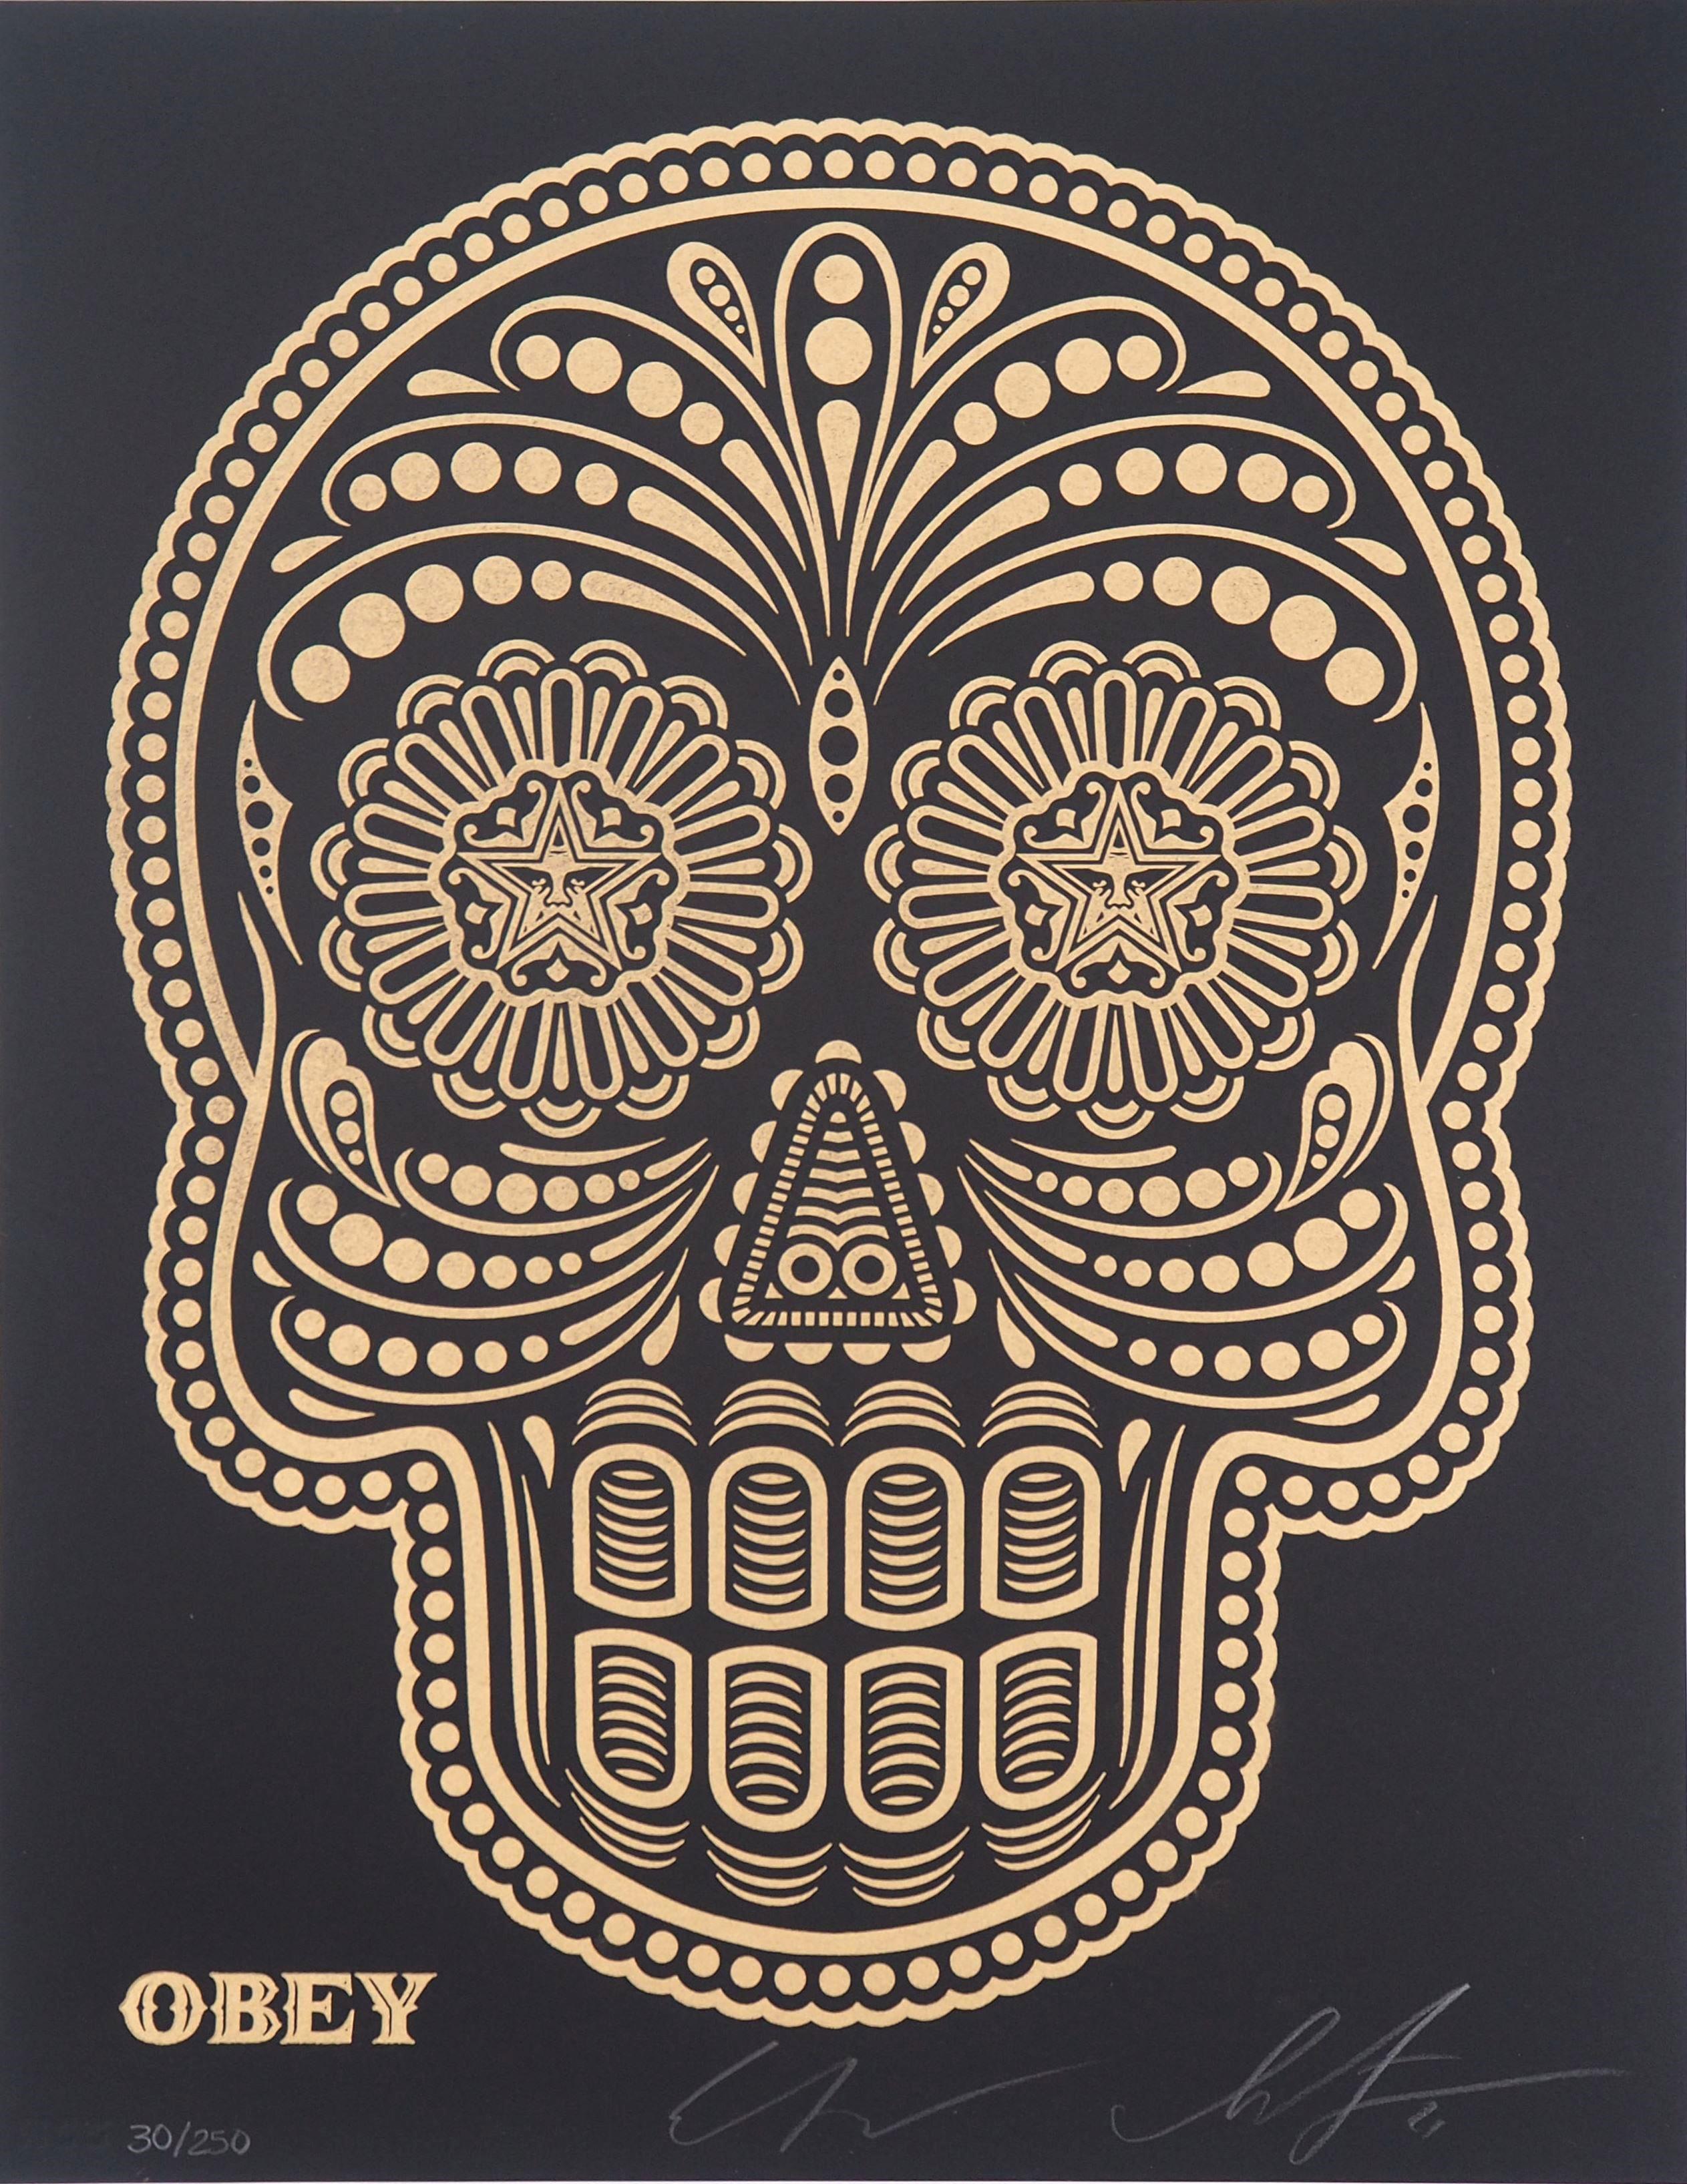 Dia de los Muertos / Day of the Dead - Original Handsigned Letterpress set - Print by Shepard Fairey